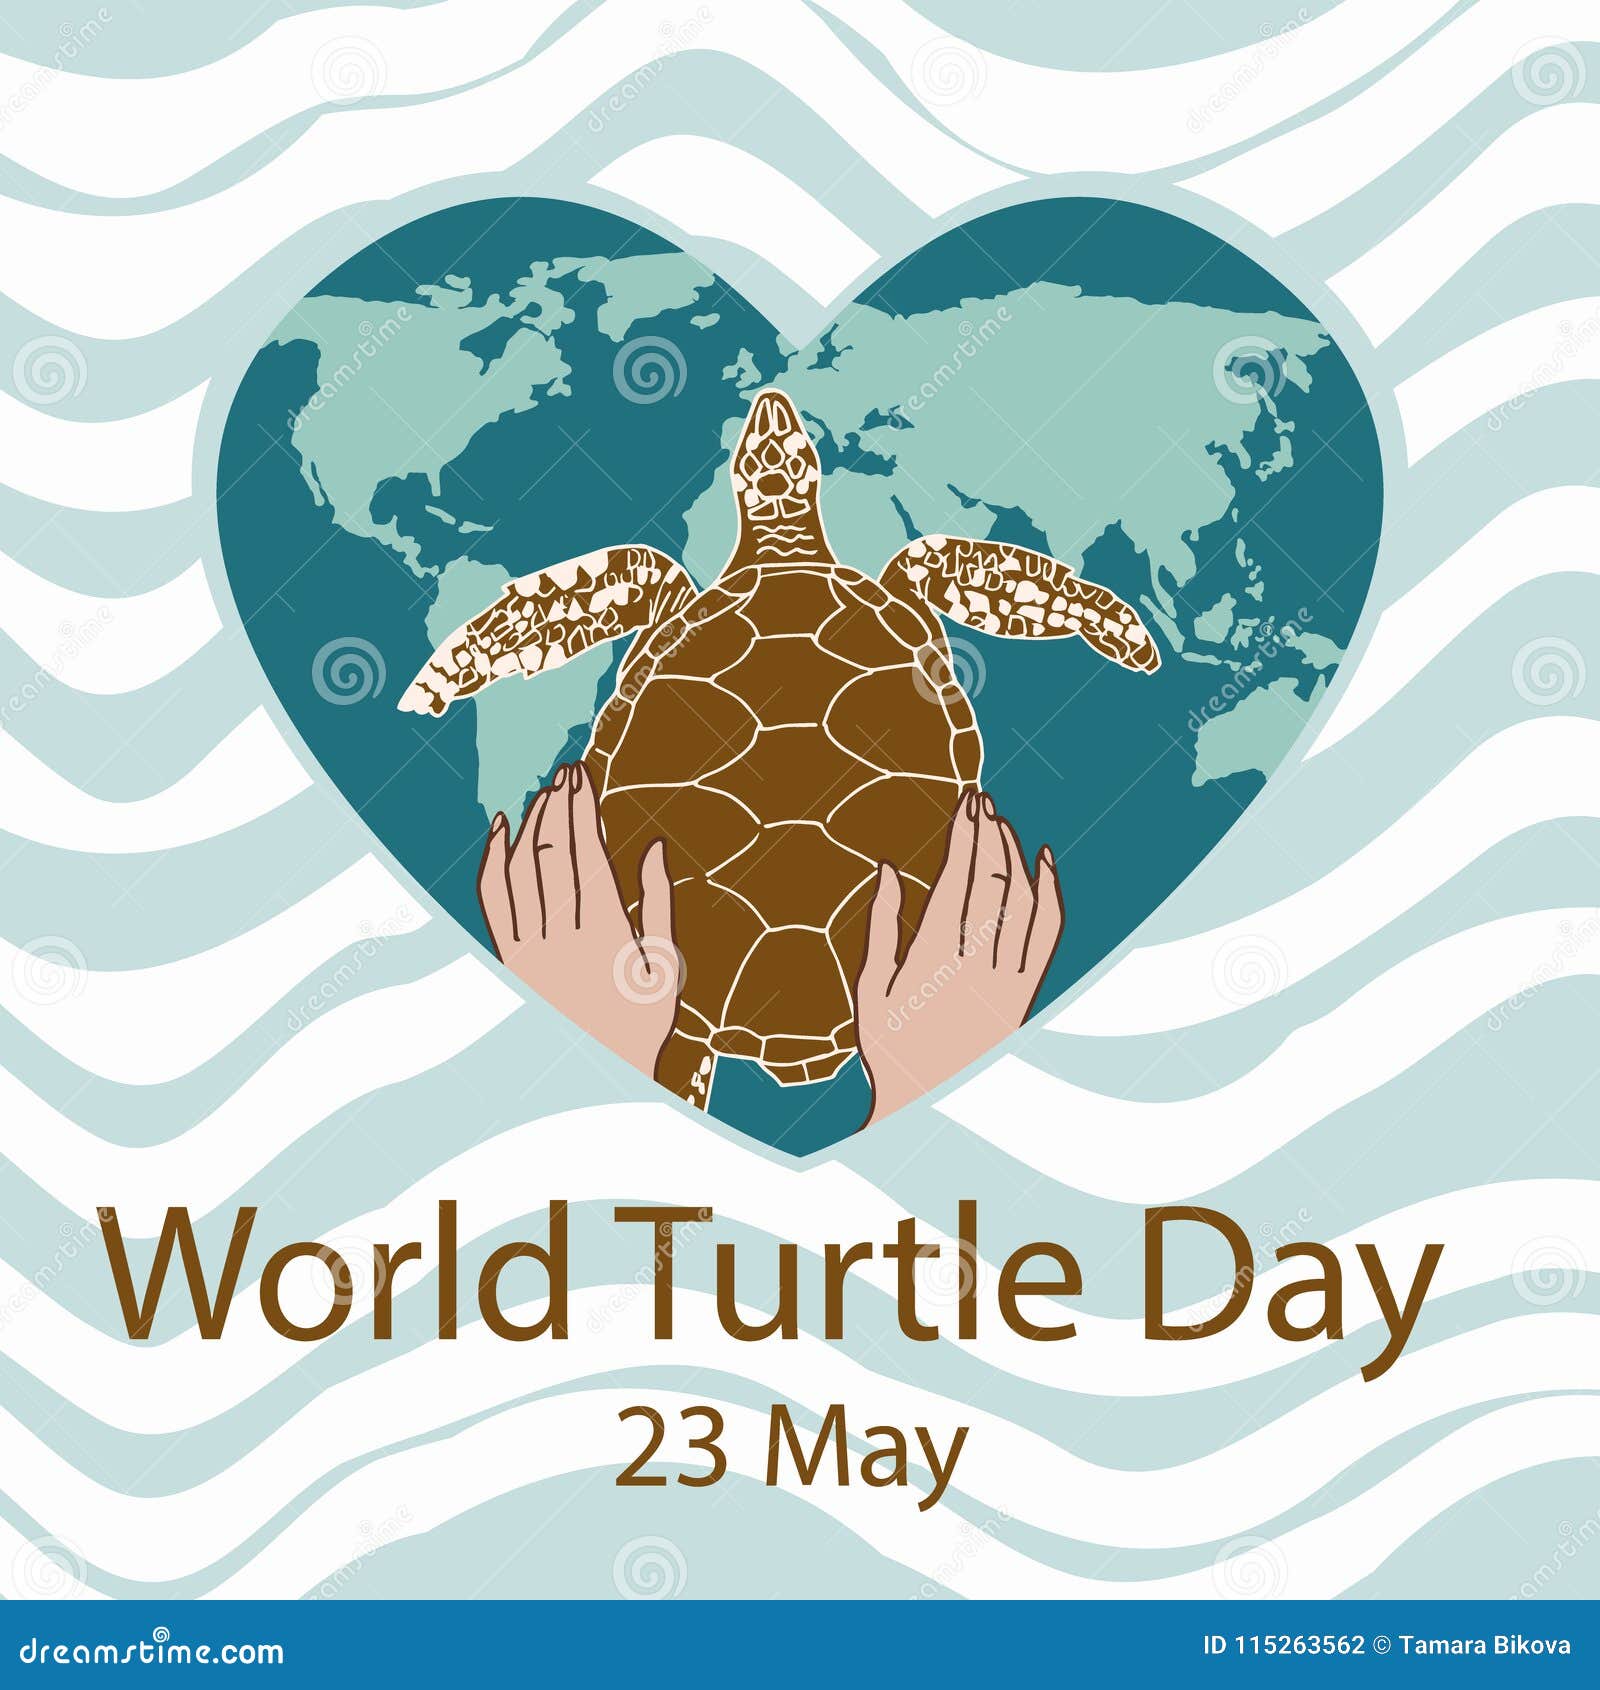 World turtle day ditaja oleh